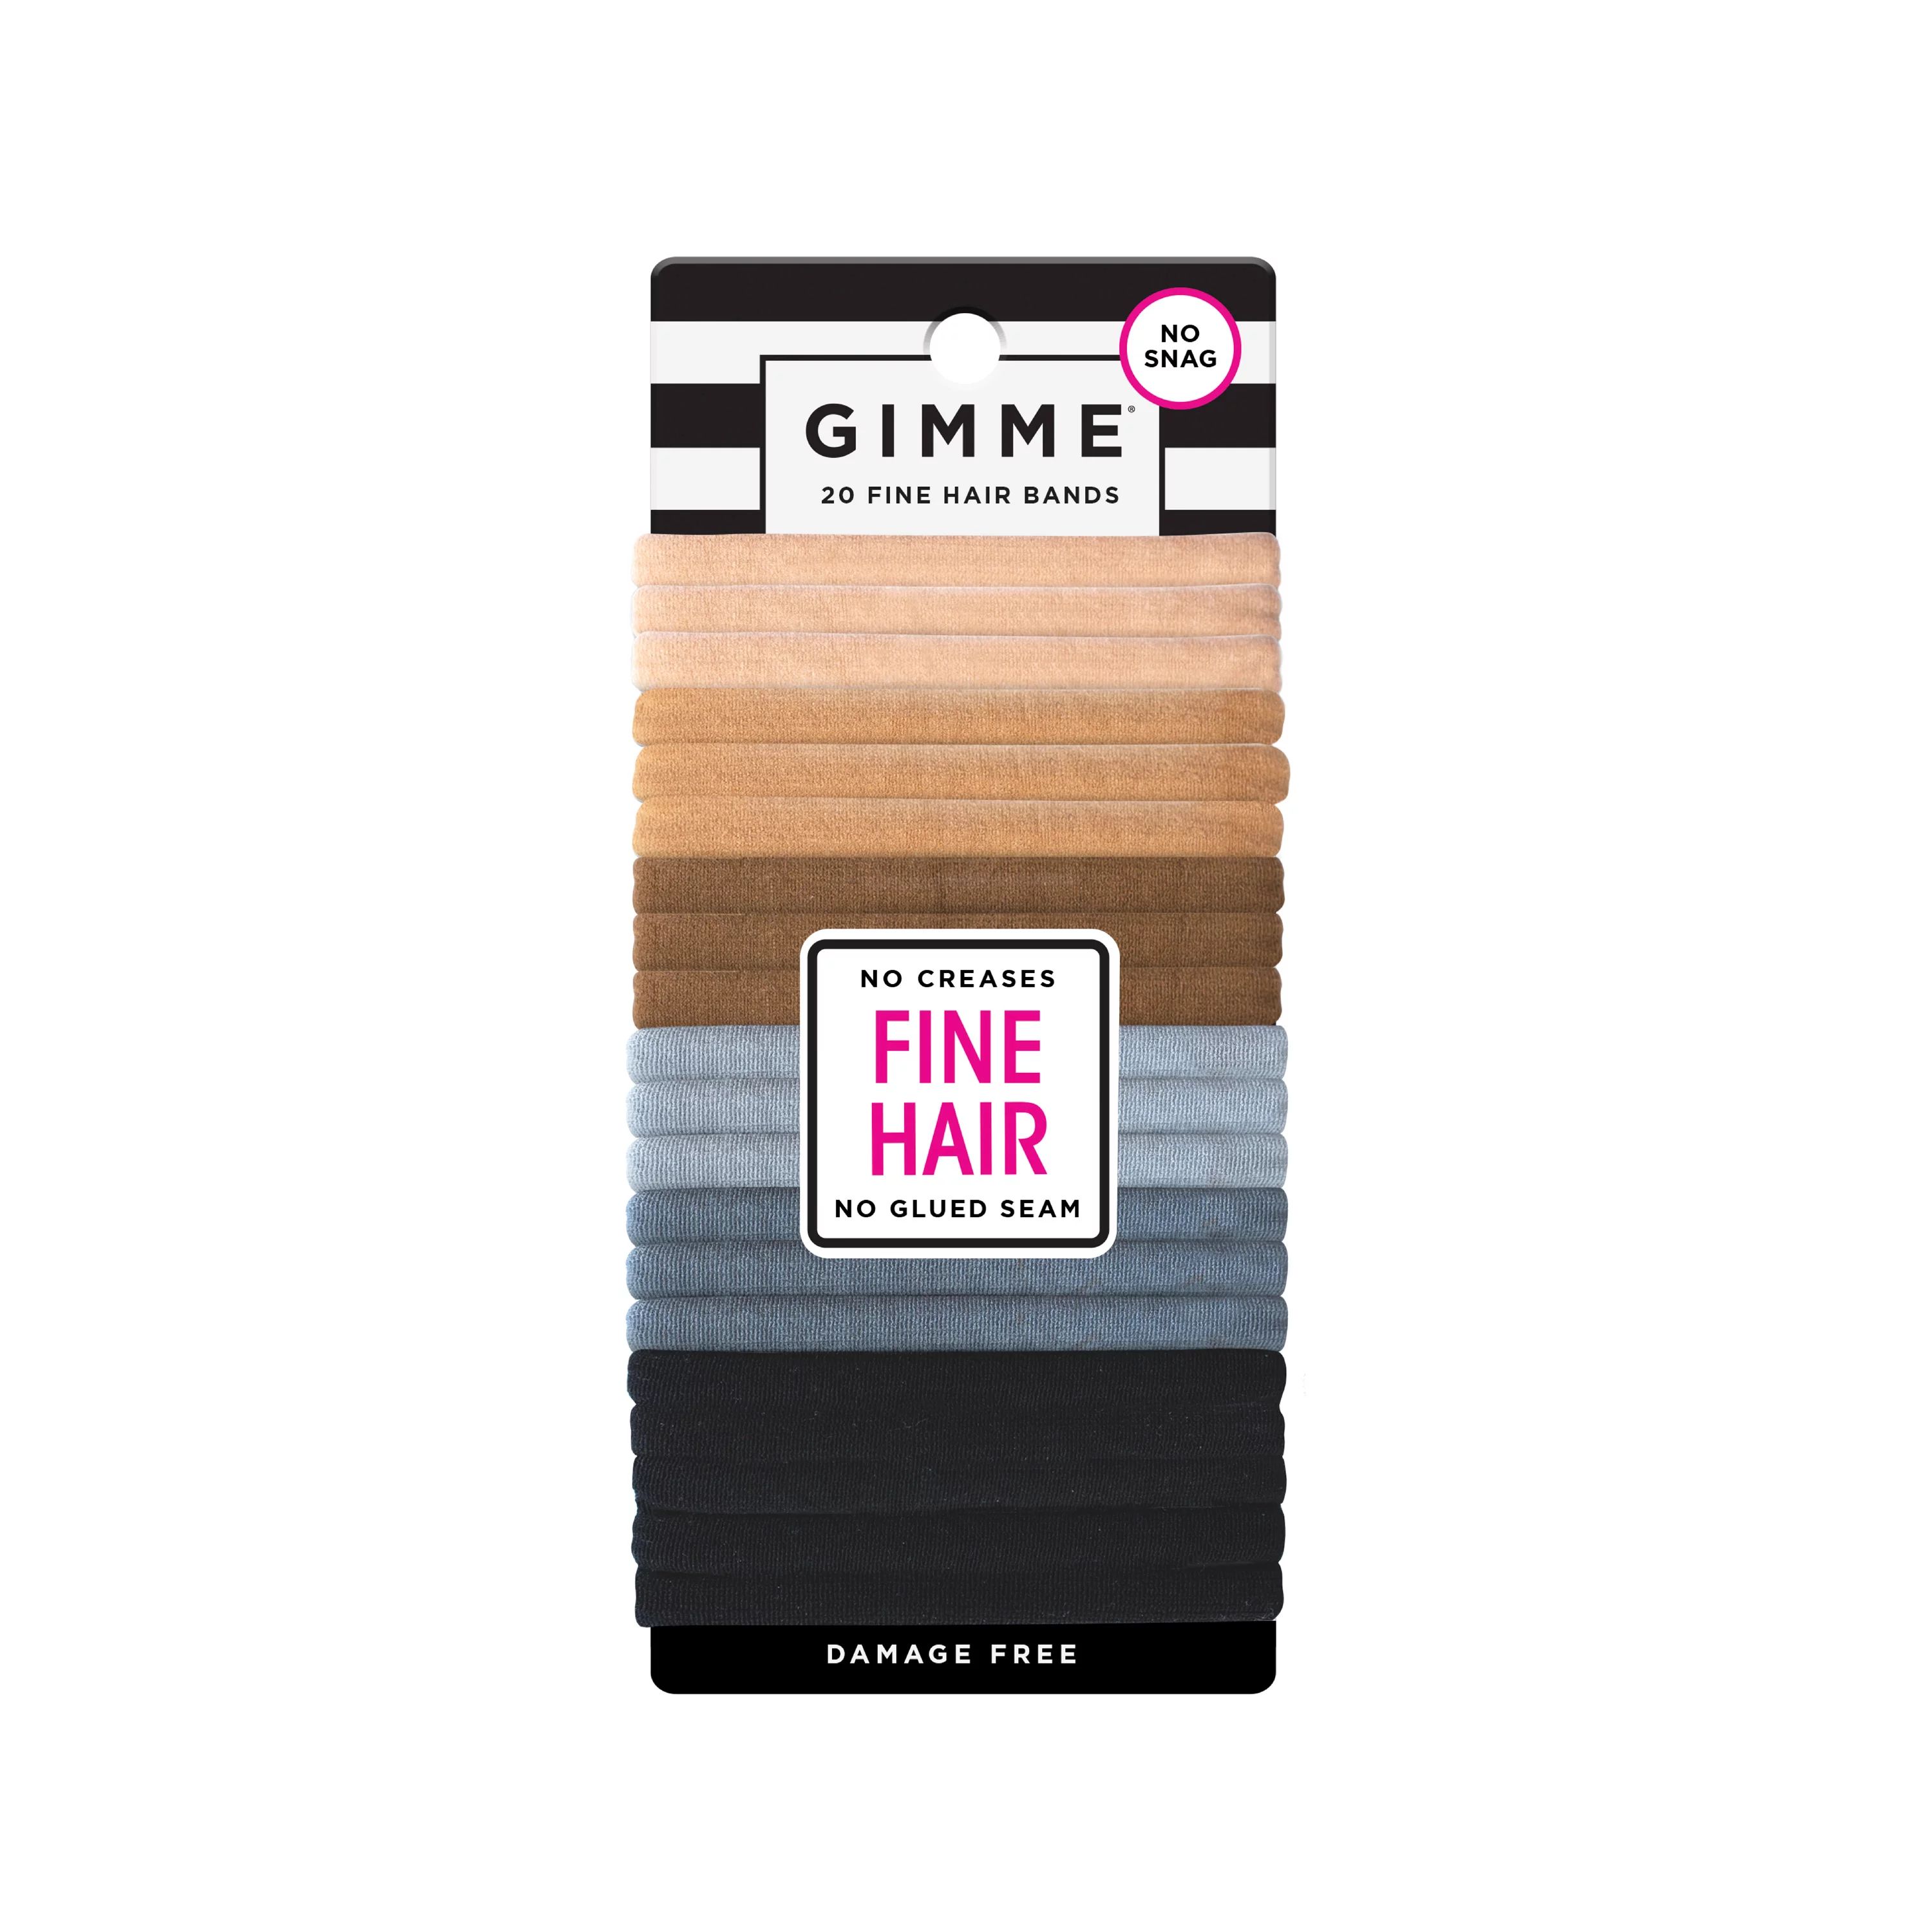 GIMME FINE HAIR BANDS NEUTRAL 20CT - Walmart.com | Walmart (US)